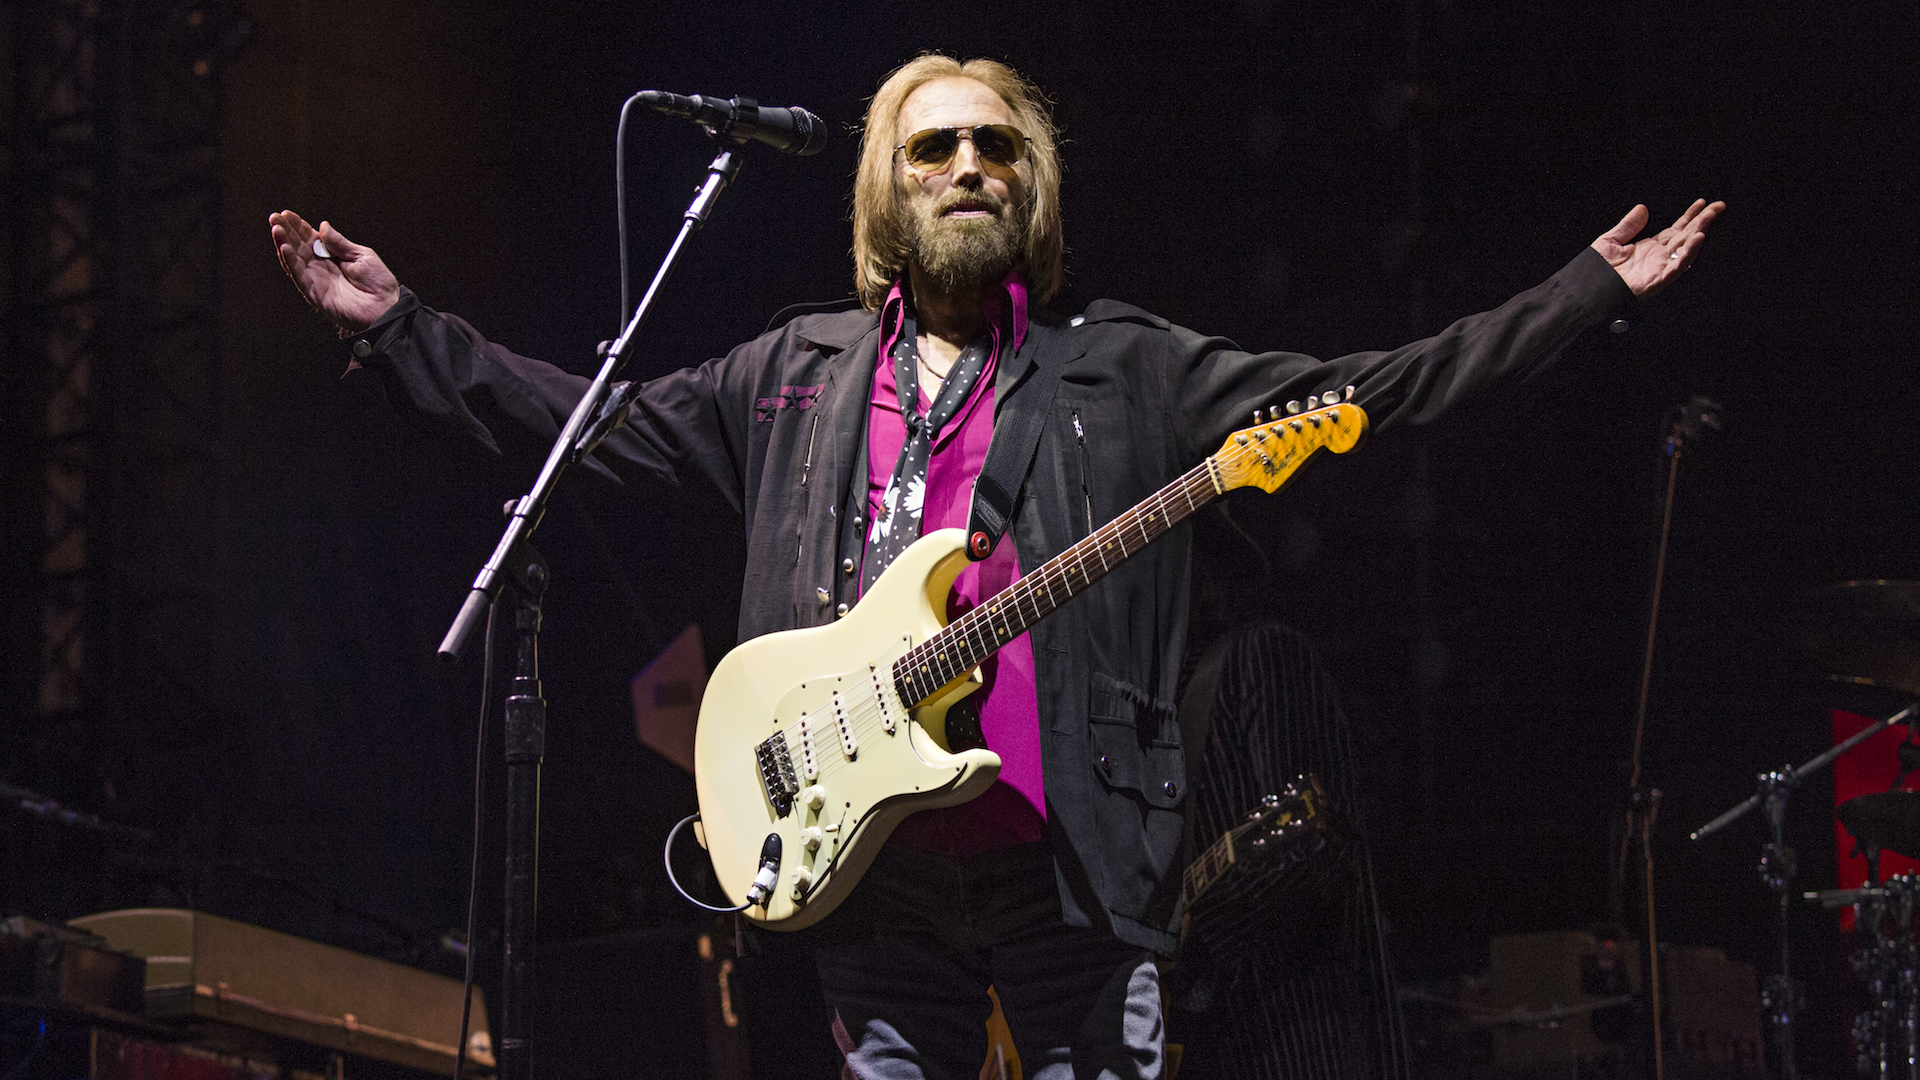 Tom Petty: 50 Greatest Songs